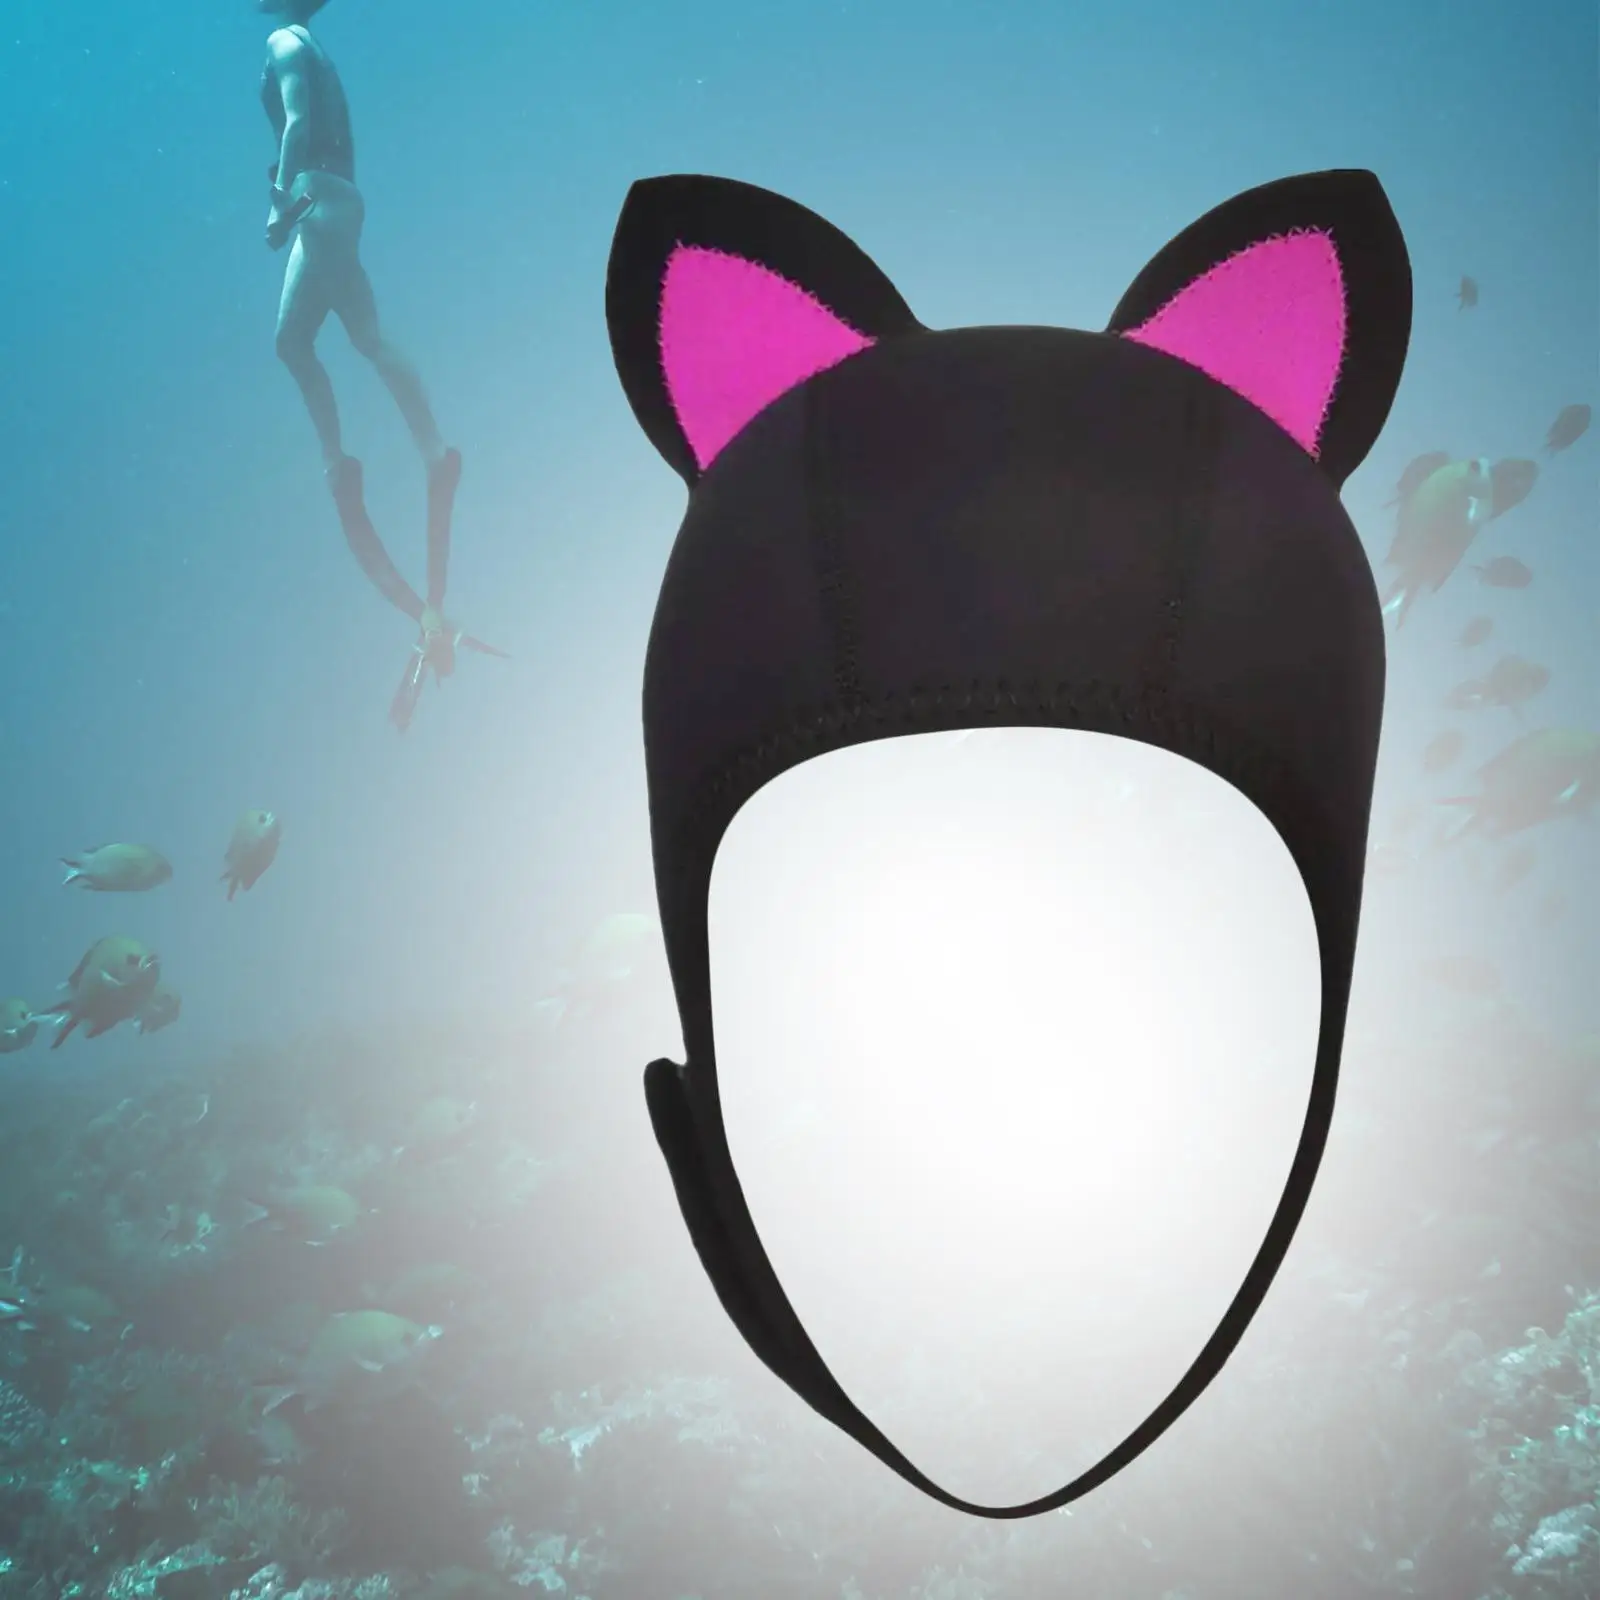 Cat Ears Scuba Diving Hood 3mm Neoprene Hood for Sailing Snorkeling Kayaking